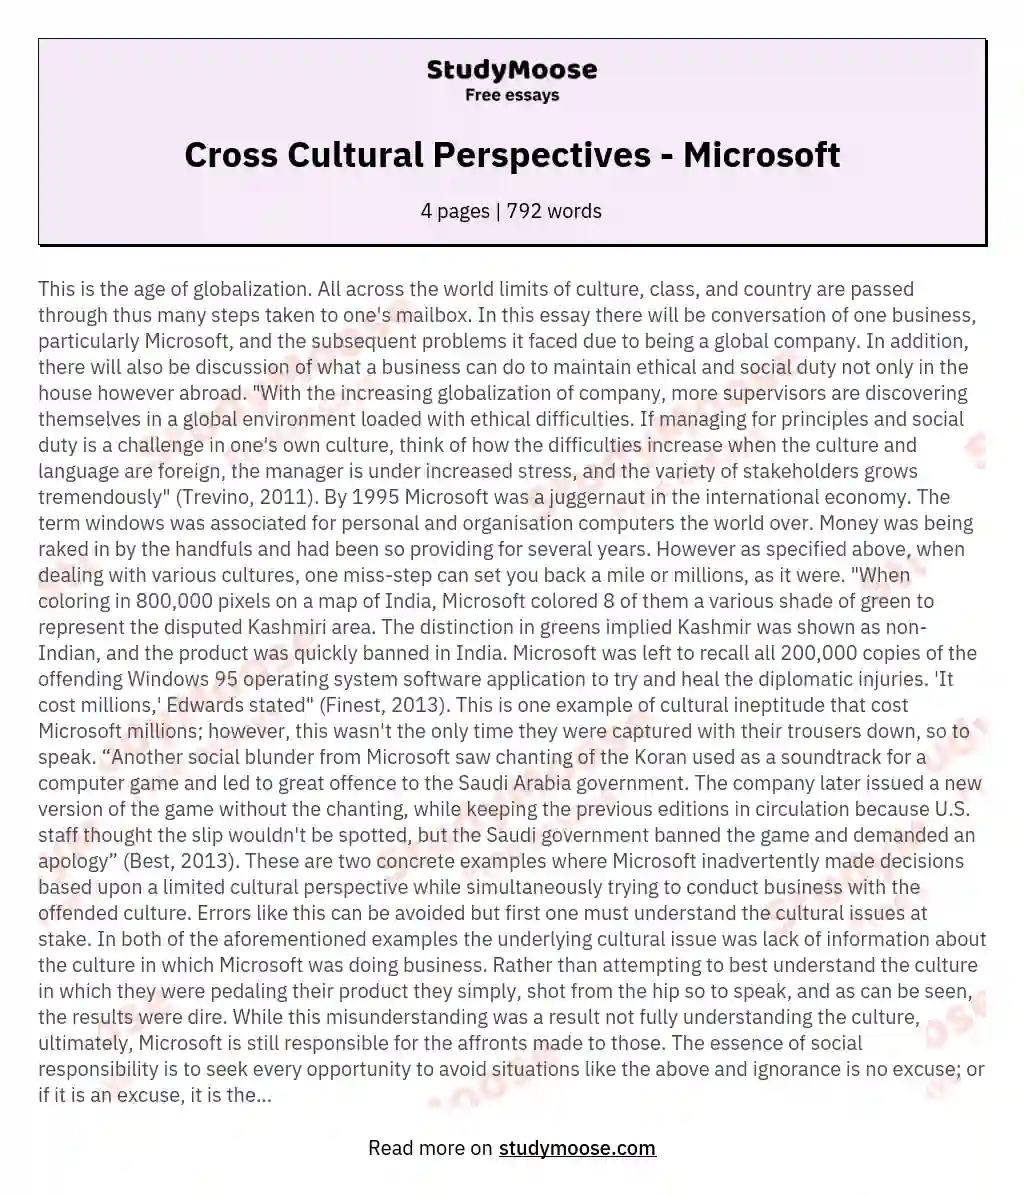 Cross Cultural Perspectives - Microsoft essay